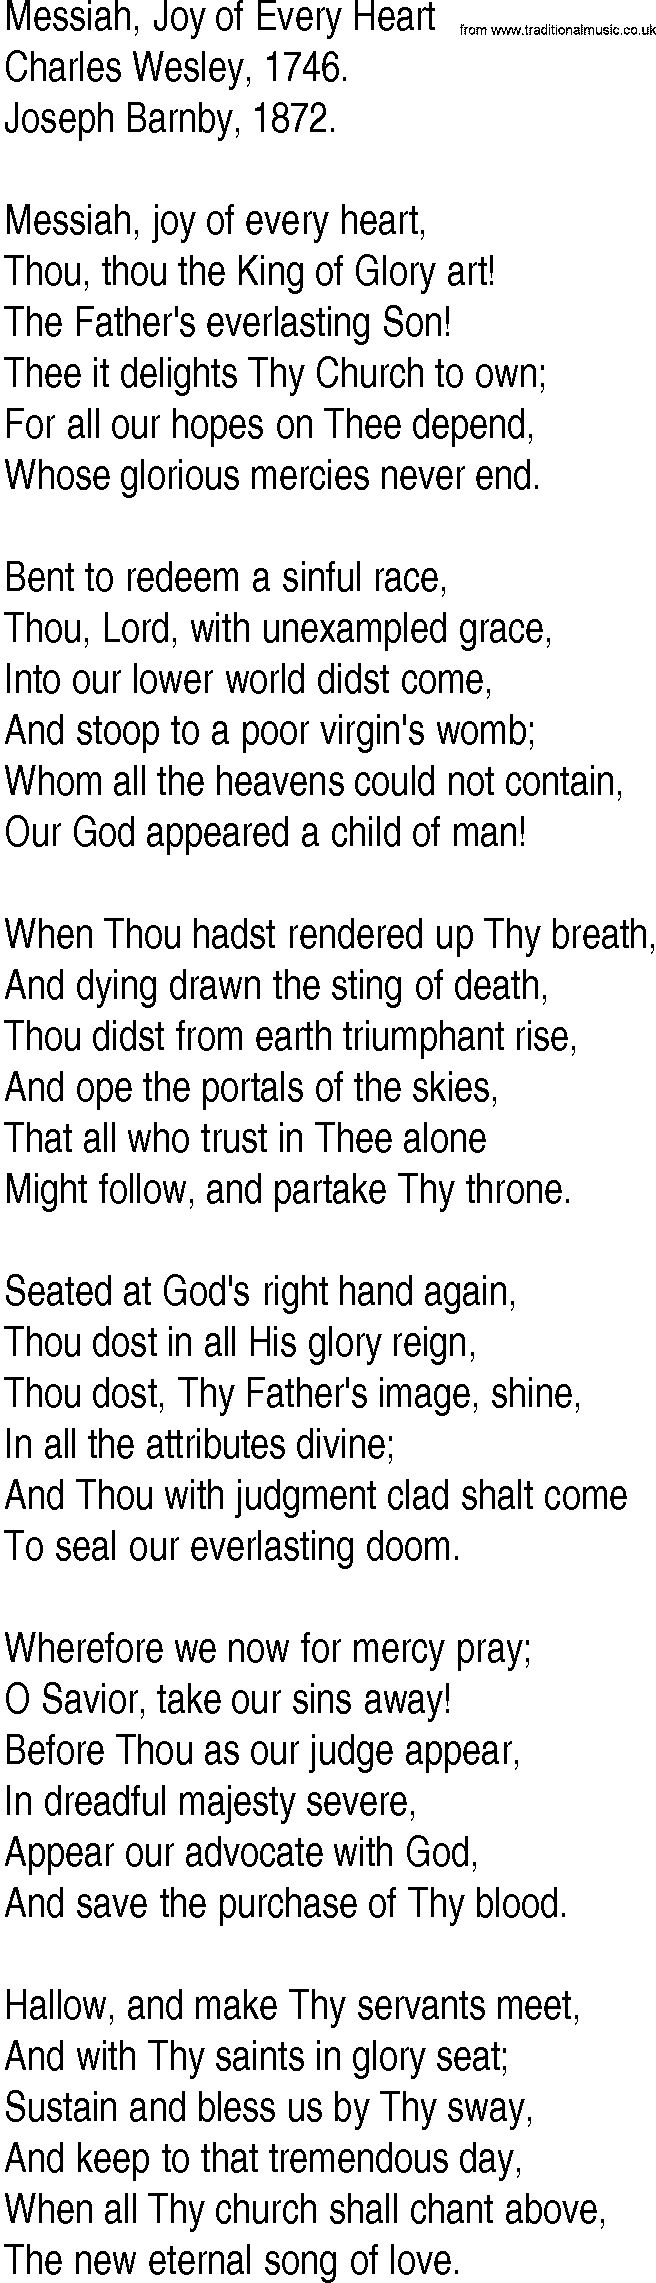 Hymn and Gospel Song: Messiah, Joy of Every Heart by Charles Wesley lyrics